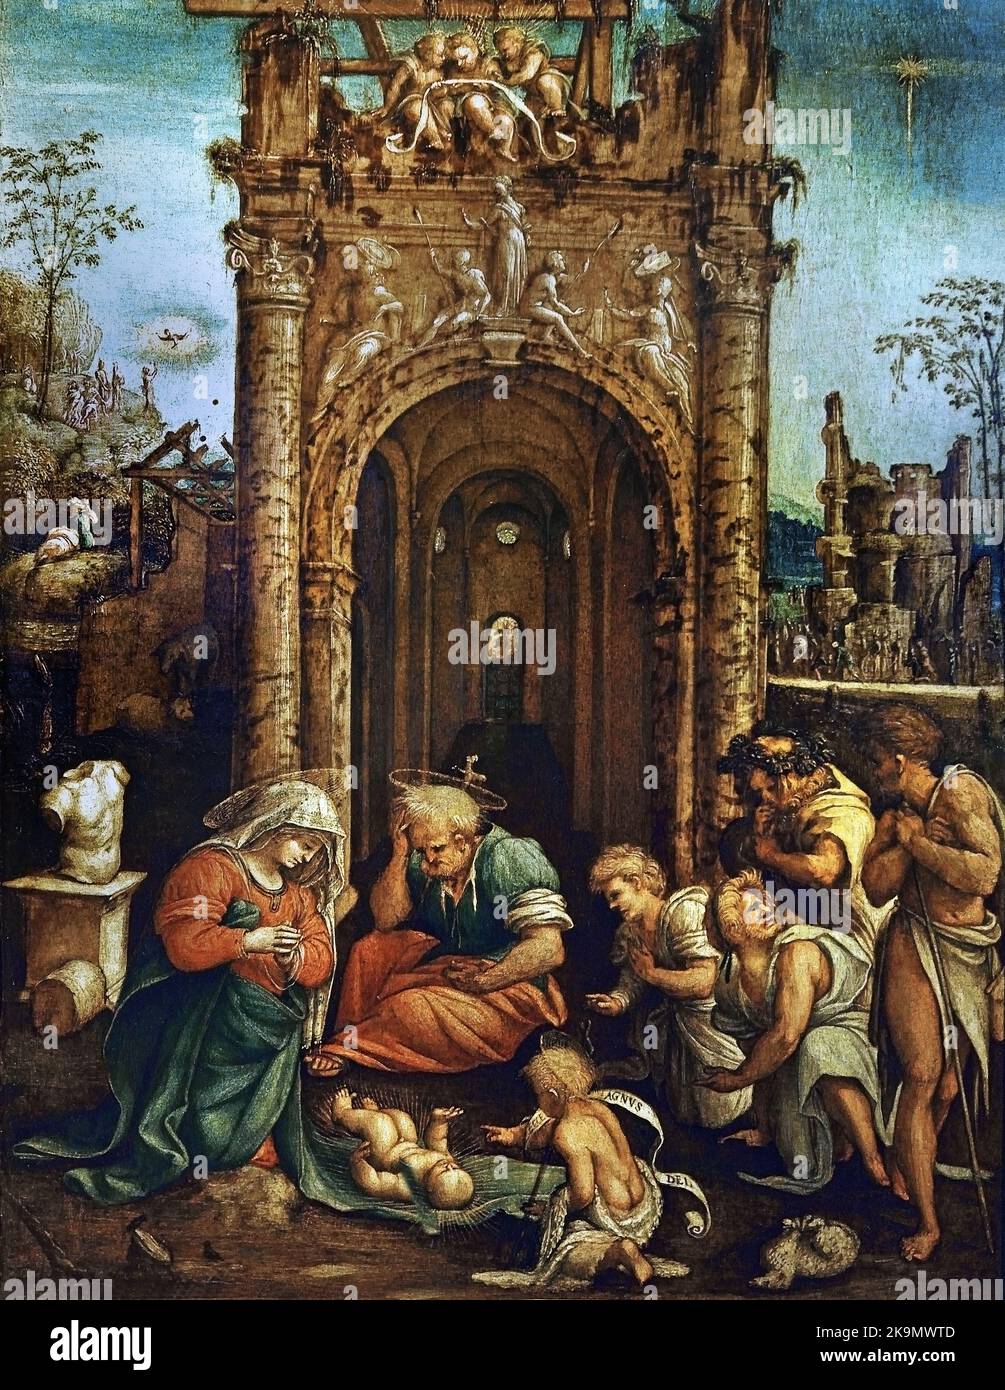 Adoration des bergers - Amico Asperasi Asperasi 1474 – 1552 également appelé Amerigo Asperasi, est un peintre italien de la Renaissance 15th siècle Italie italienne, adoration des bergers, Nativité de Jésus, bergers , témoins de la naissance , Jésus à Bethléem, Noël Banque D'Images